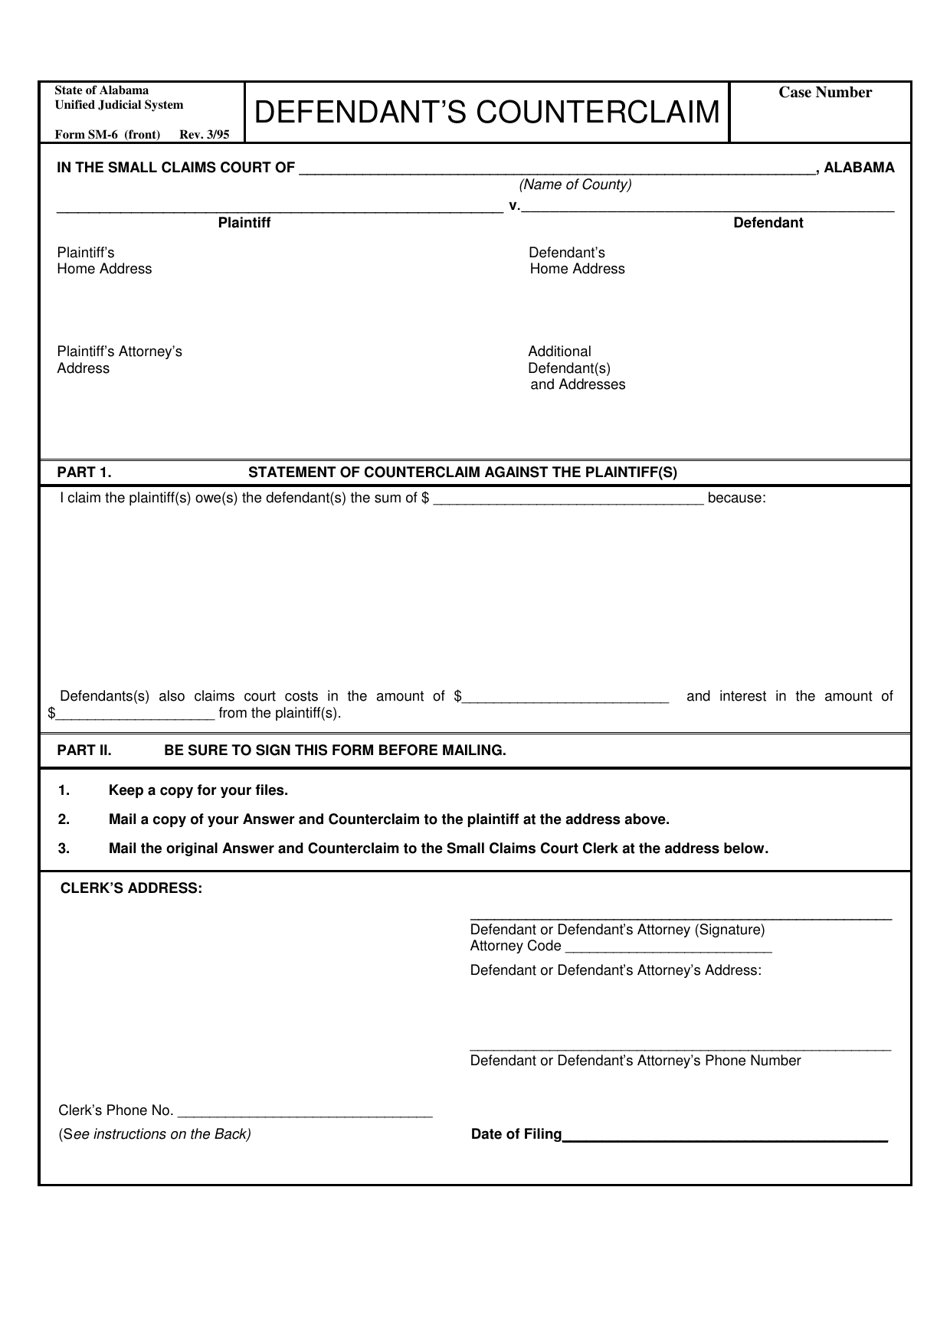 Form SM-6 Defendants Counterclaim - Alabama, Page 1